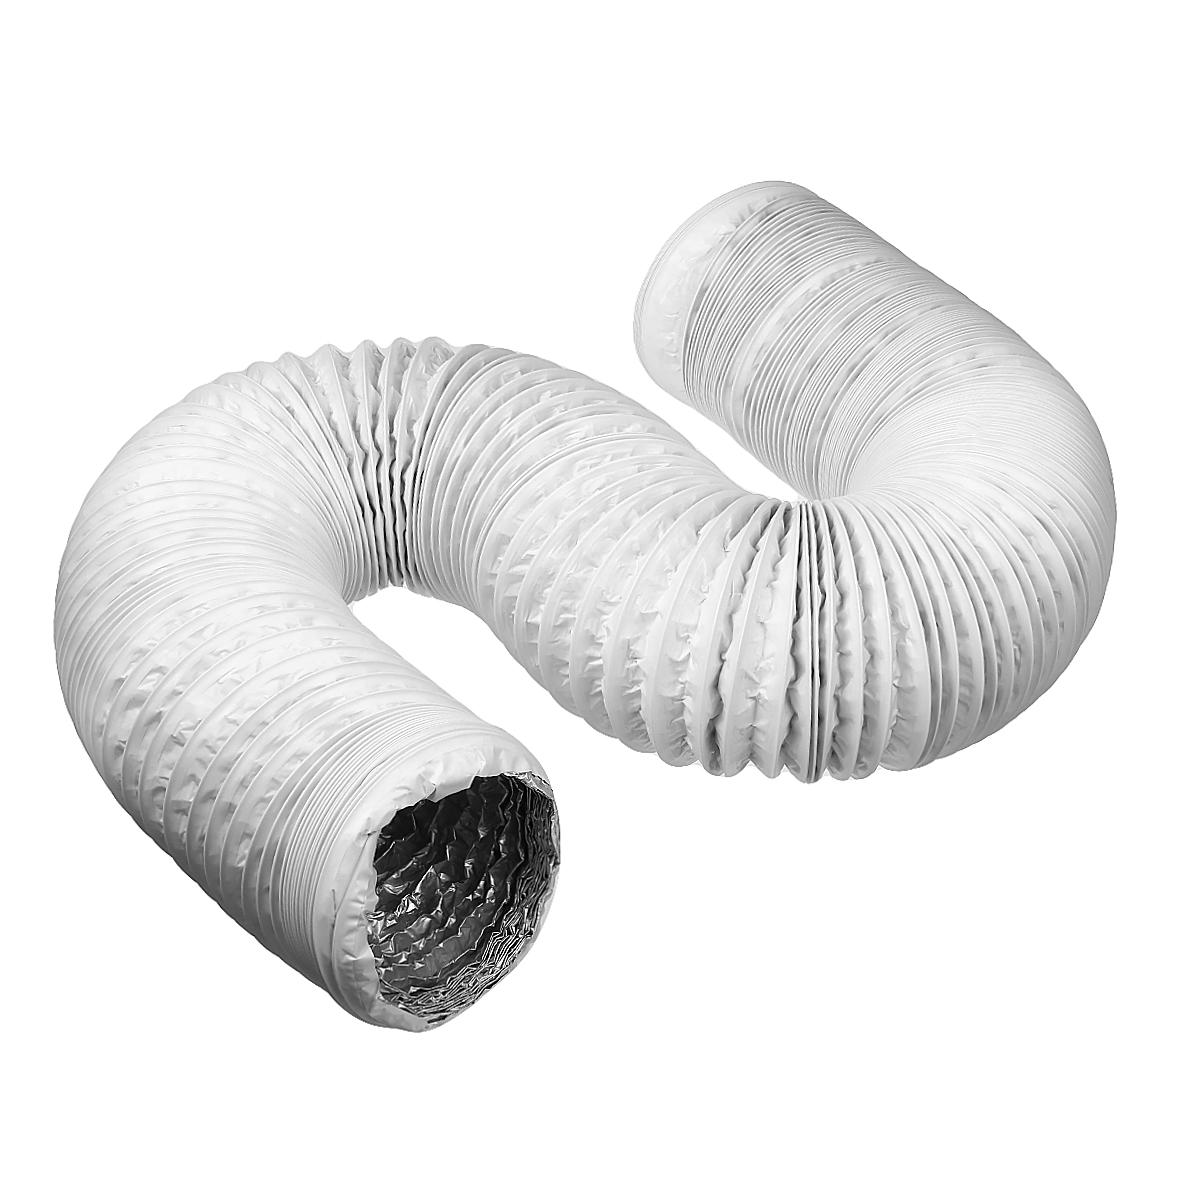 Dia15cm/6 inch 6m flexible air conditioner exhaust hose for portable